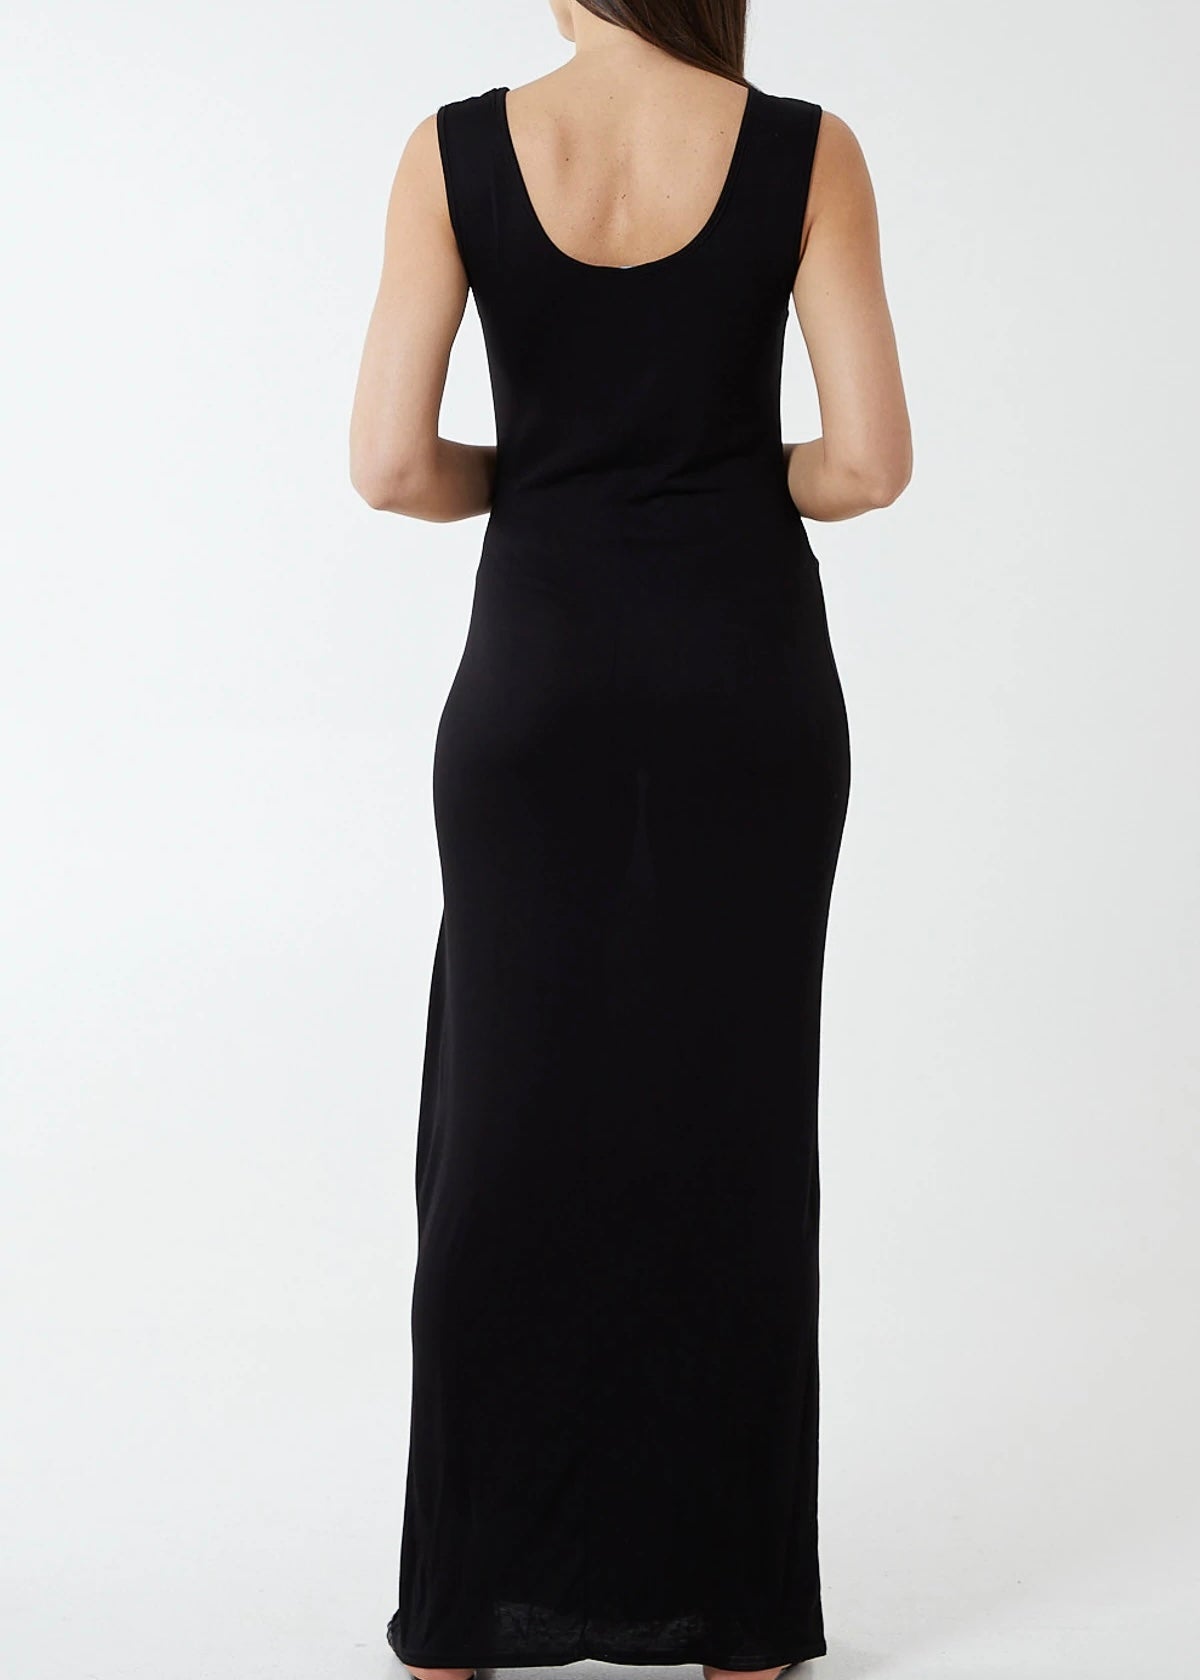 Sands Basic Black Dress